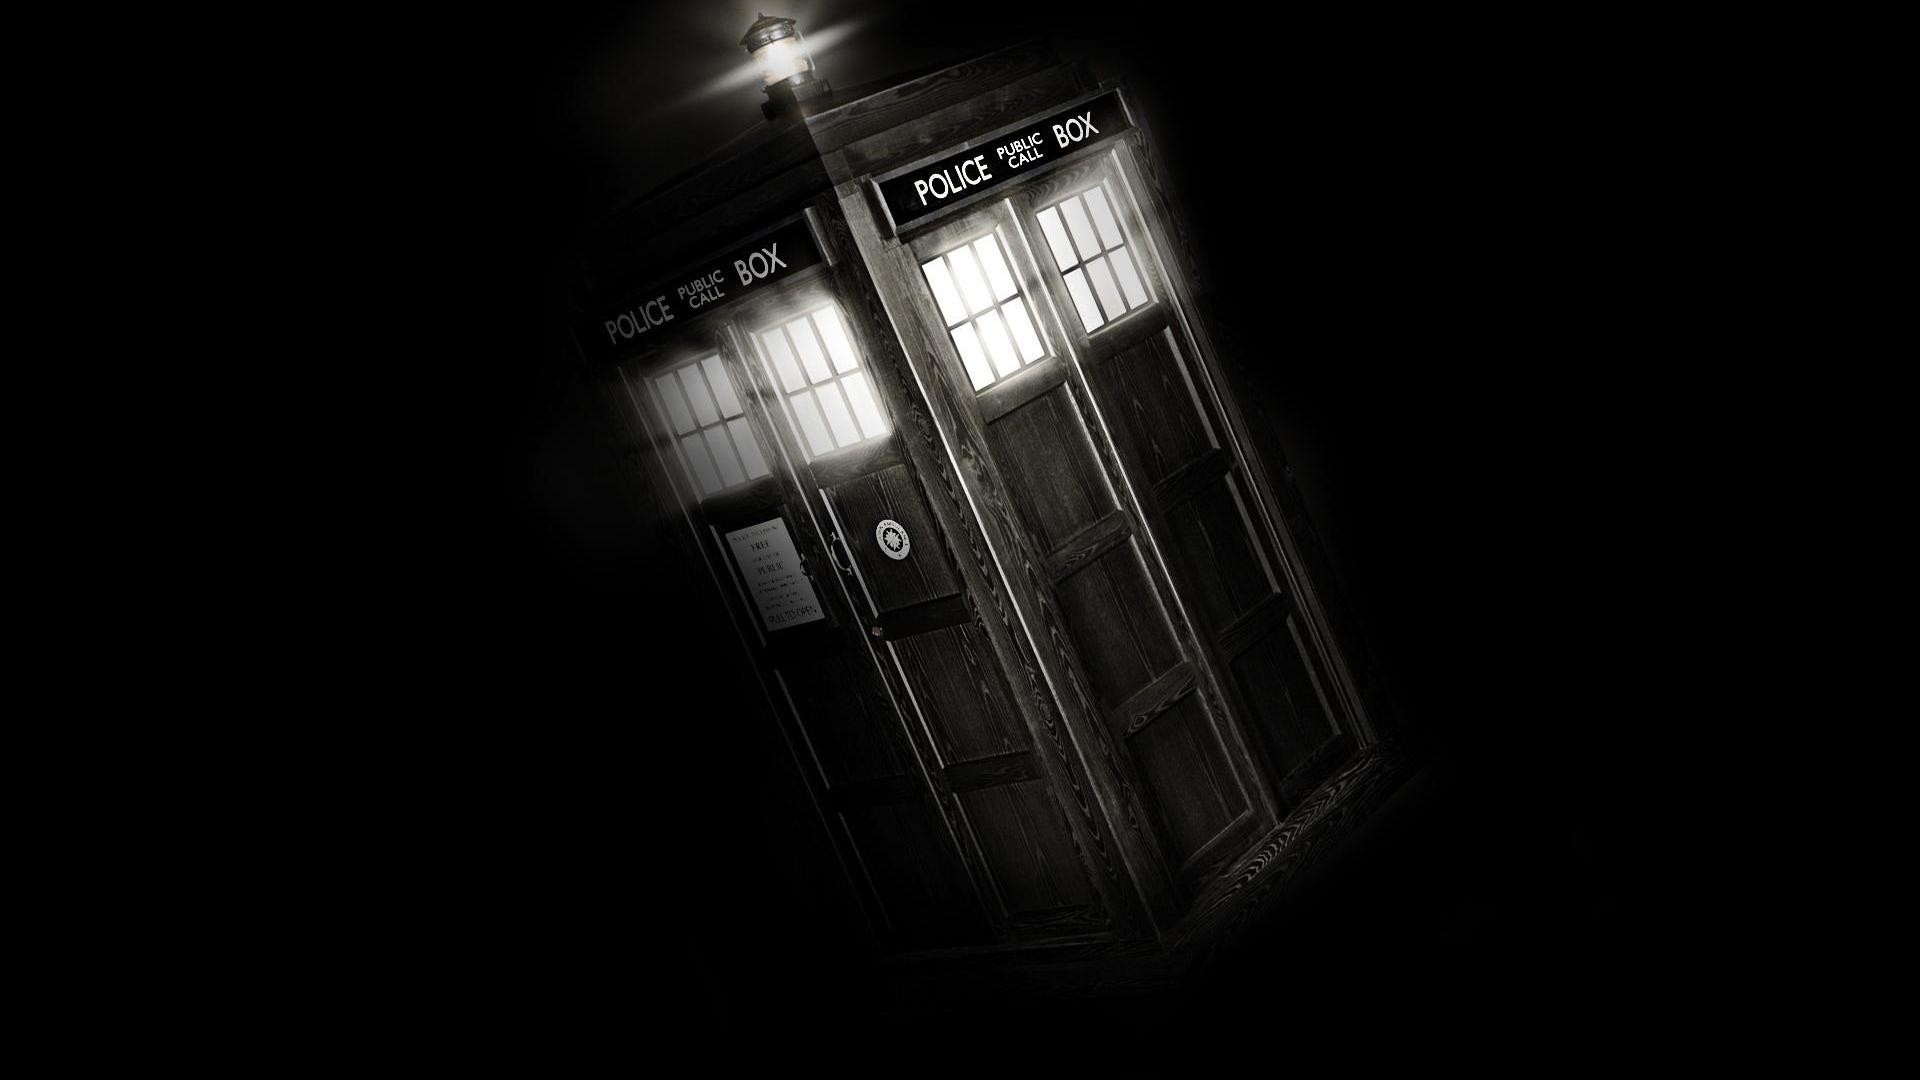 1920x1080 Doctor Who Matt Smith And Clara Hd Photo Wallpaper Wallpaper | HD Wallpapers  | Pinterest |